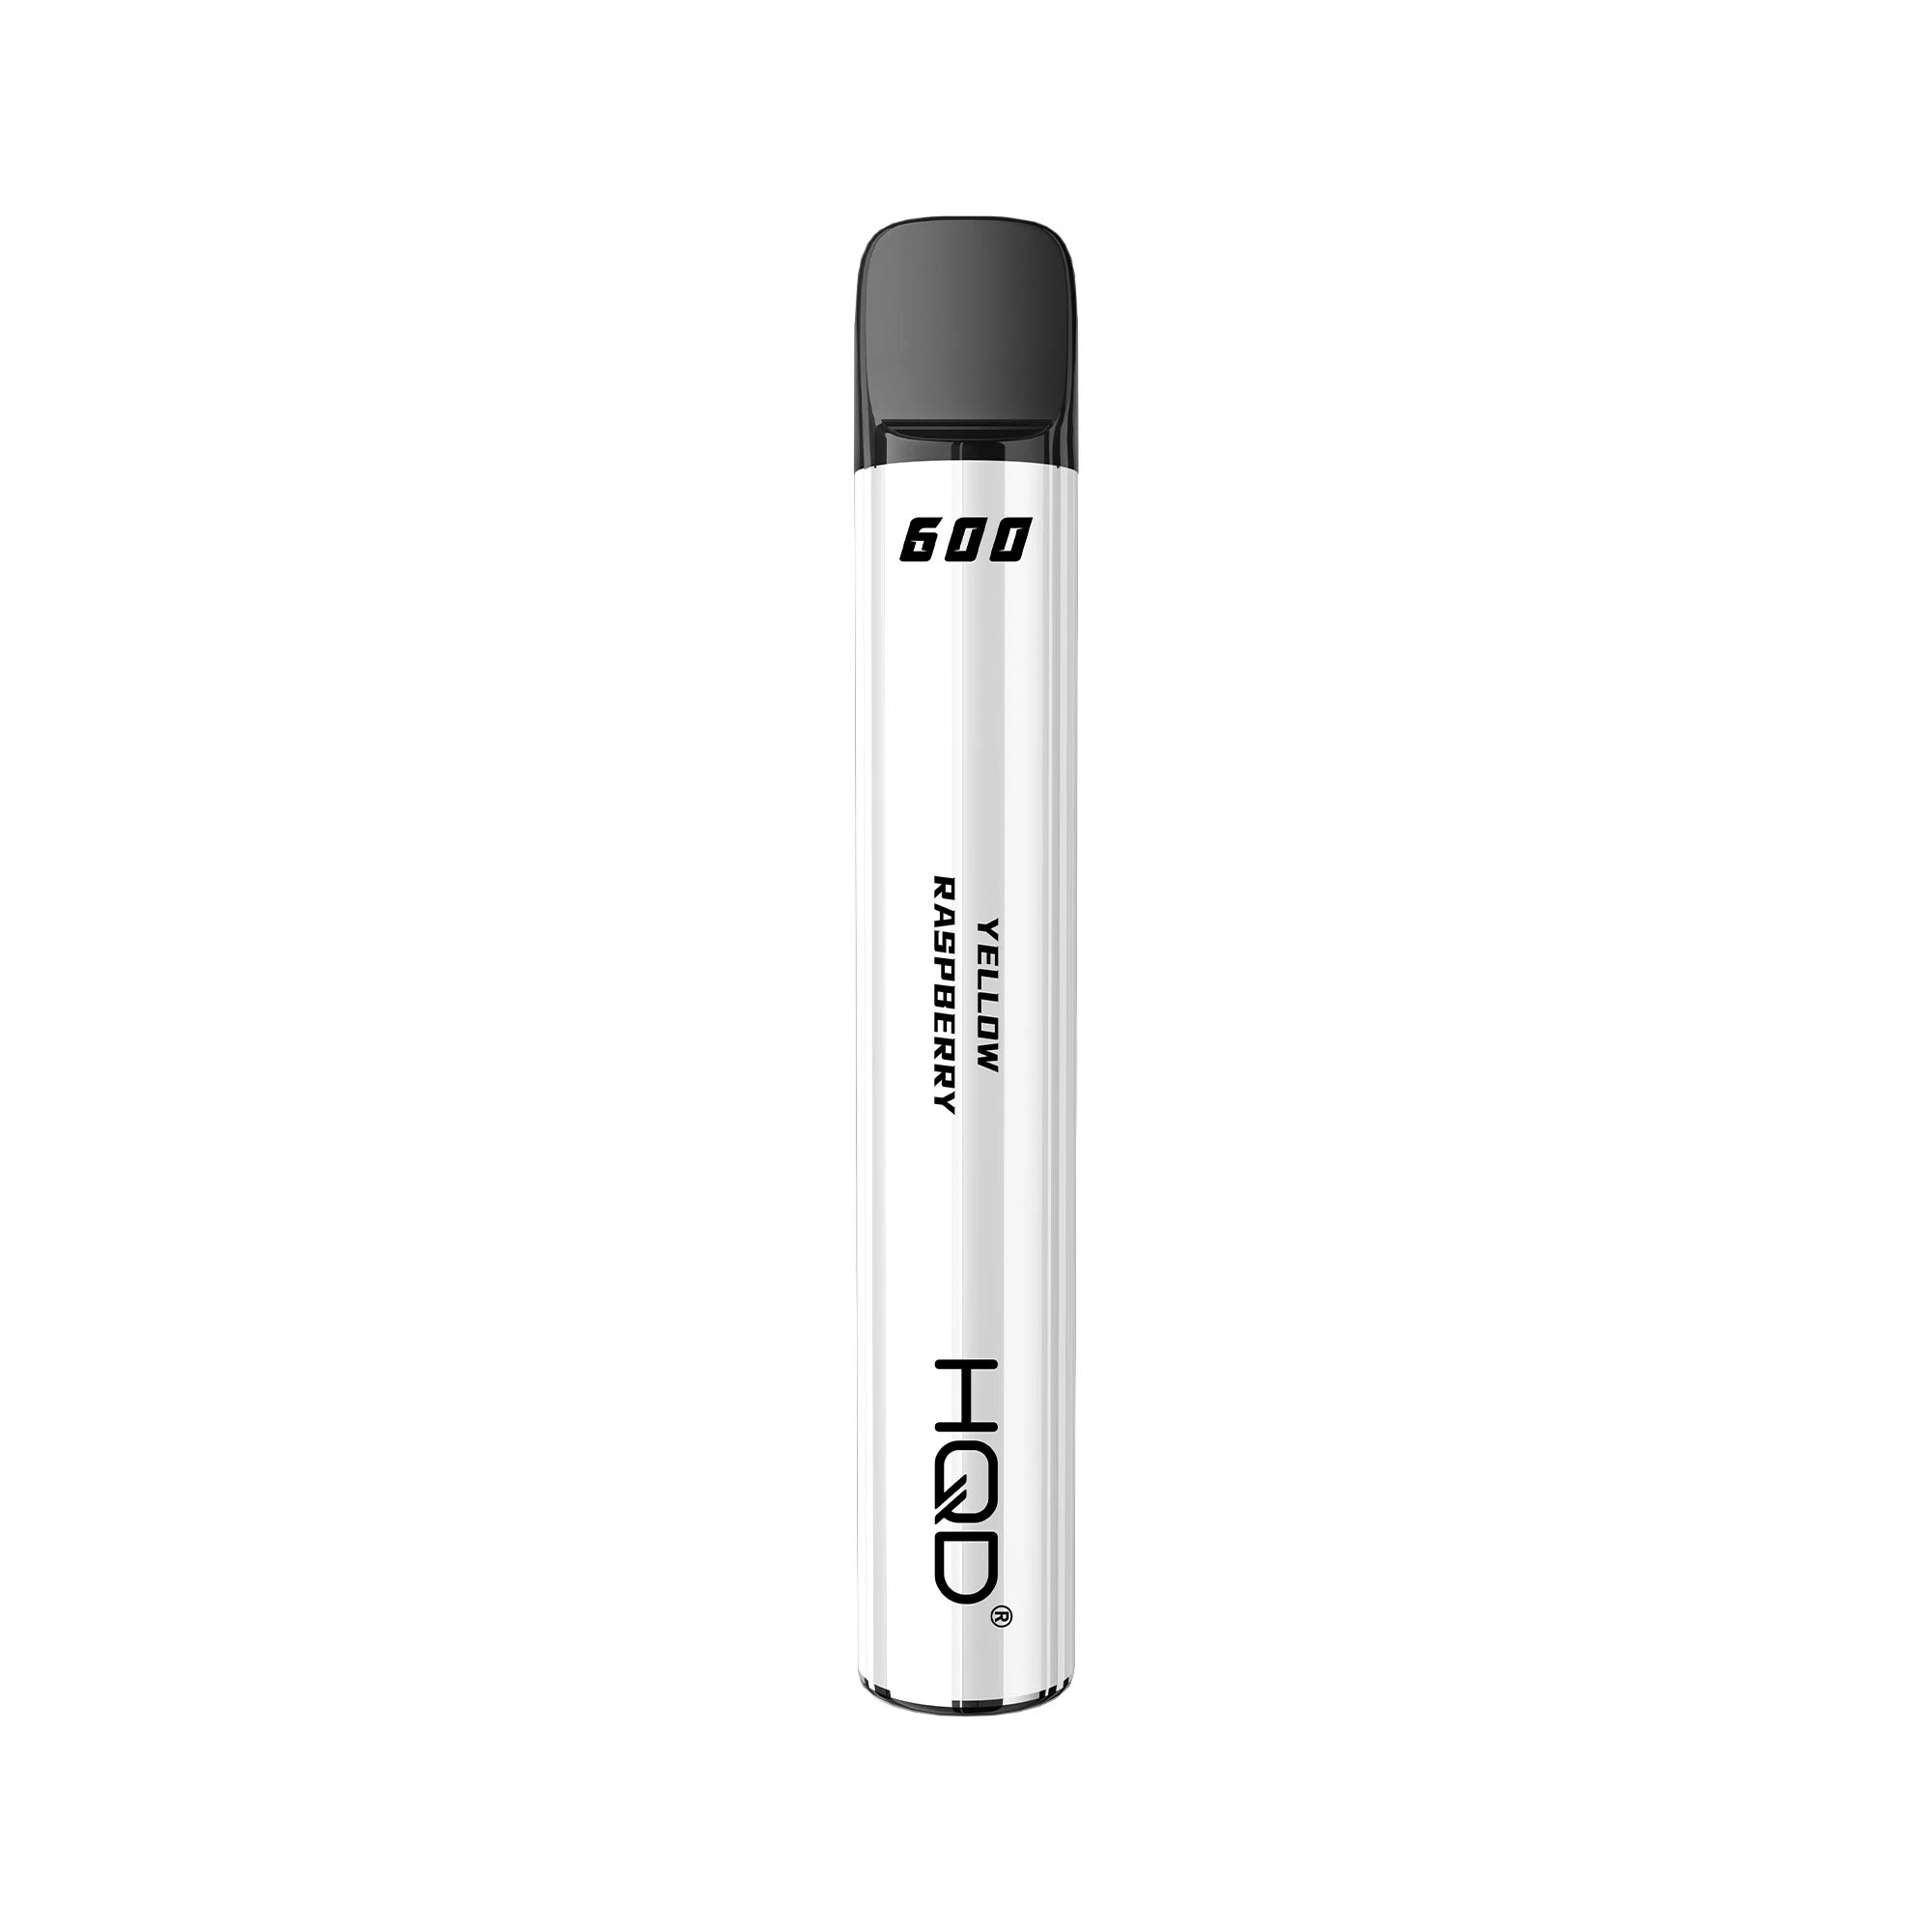 Hqd Super Bar 600 Puffs 500 mAh Best Quality vape Disposable/Chargeable Vape Pen